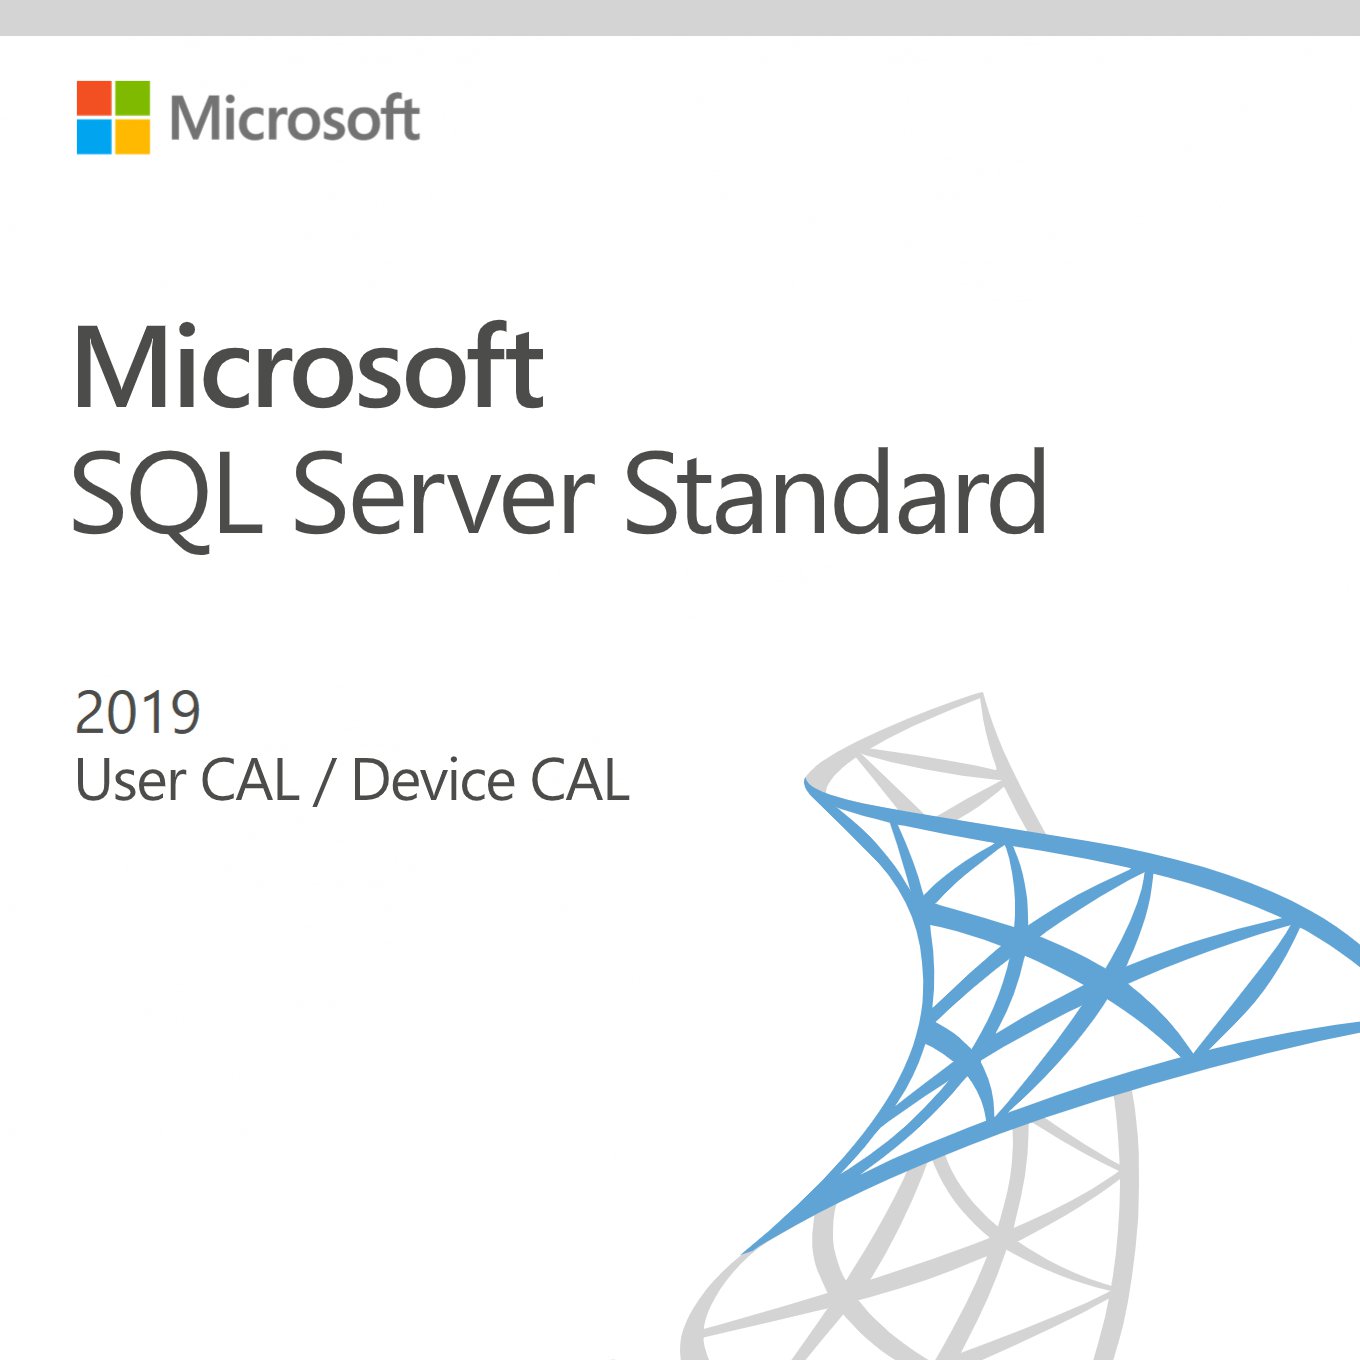 Microsoft SQL Server 2019 Standard - User / Device CALs